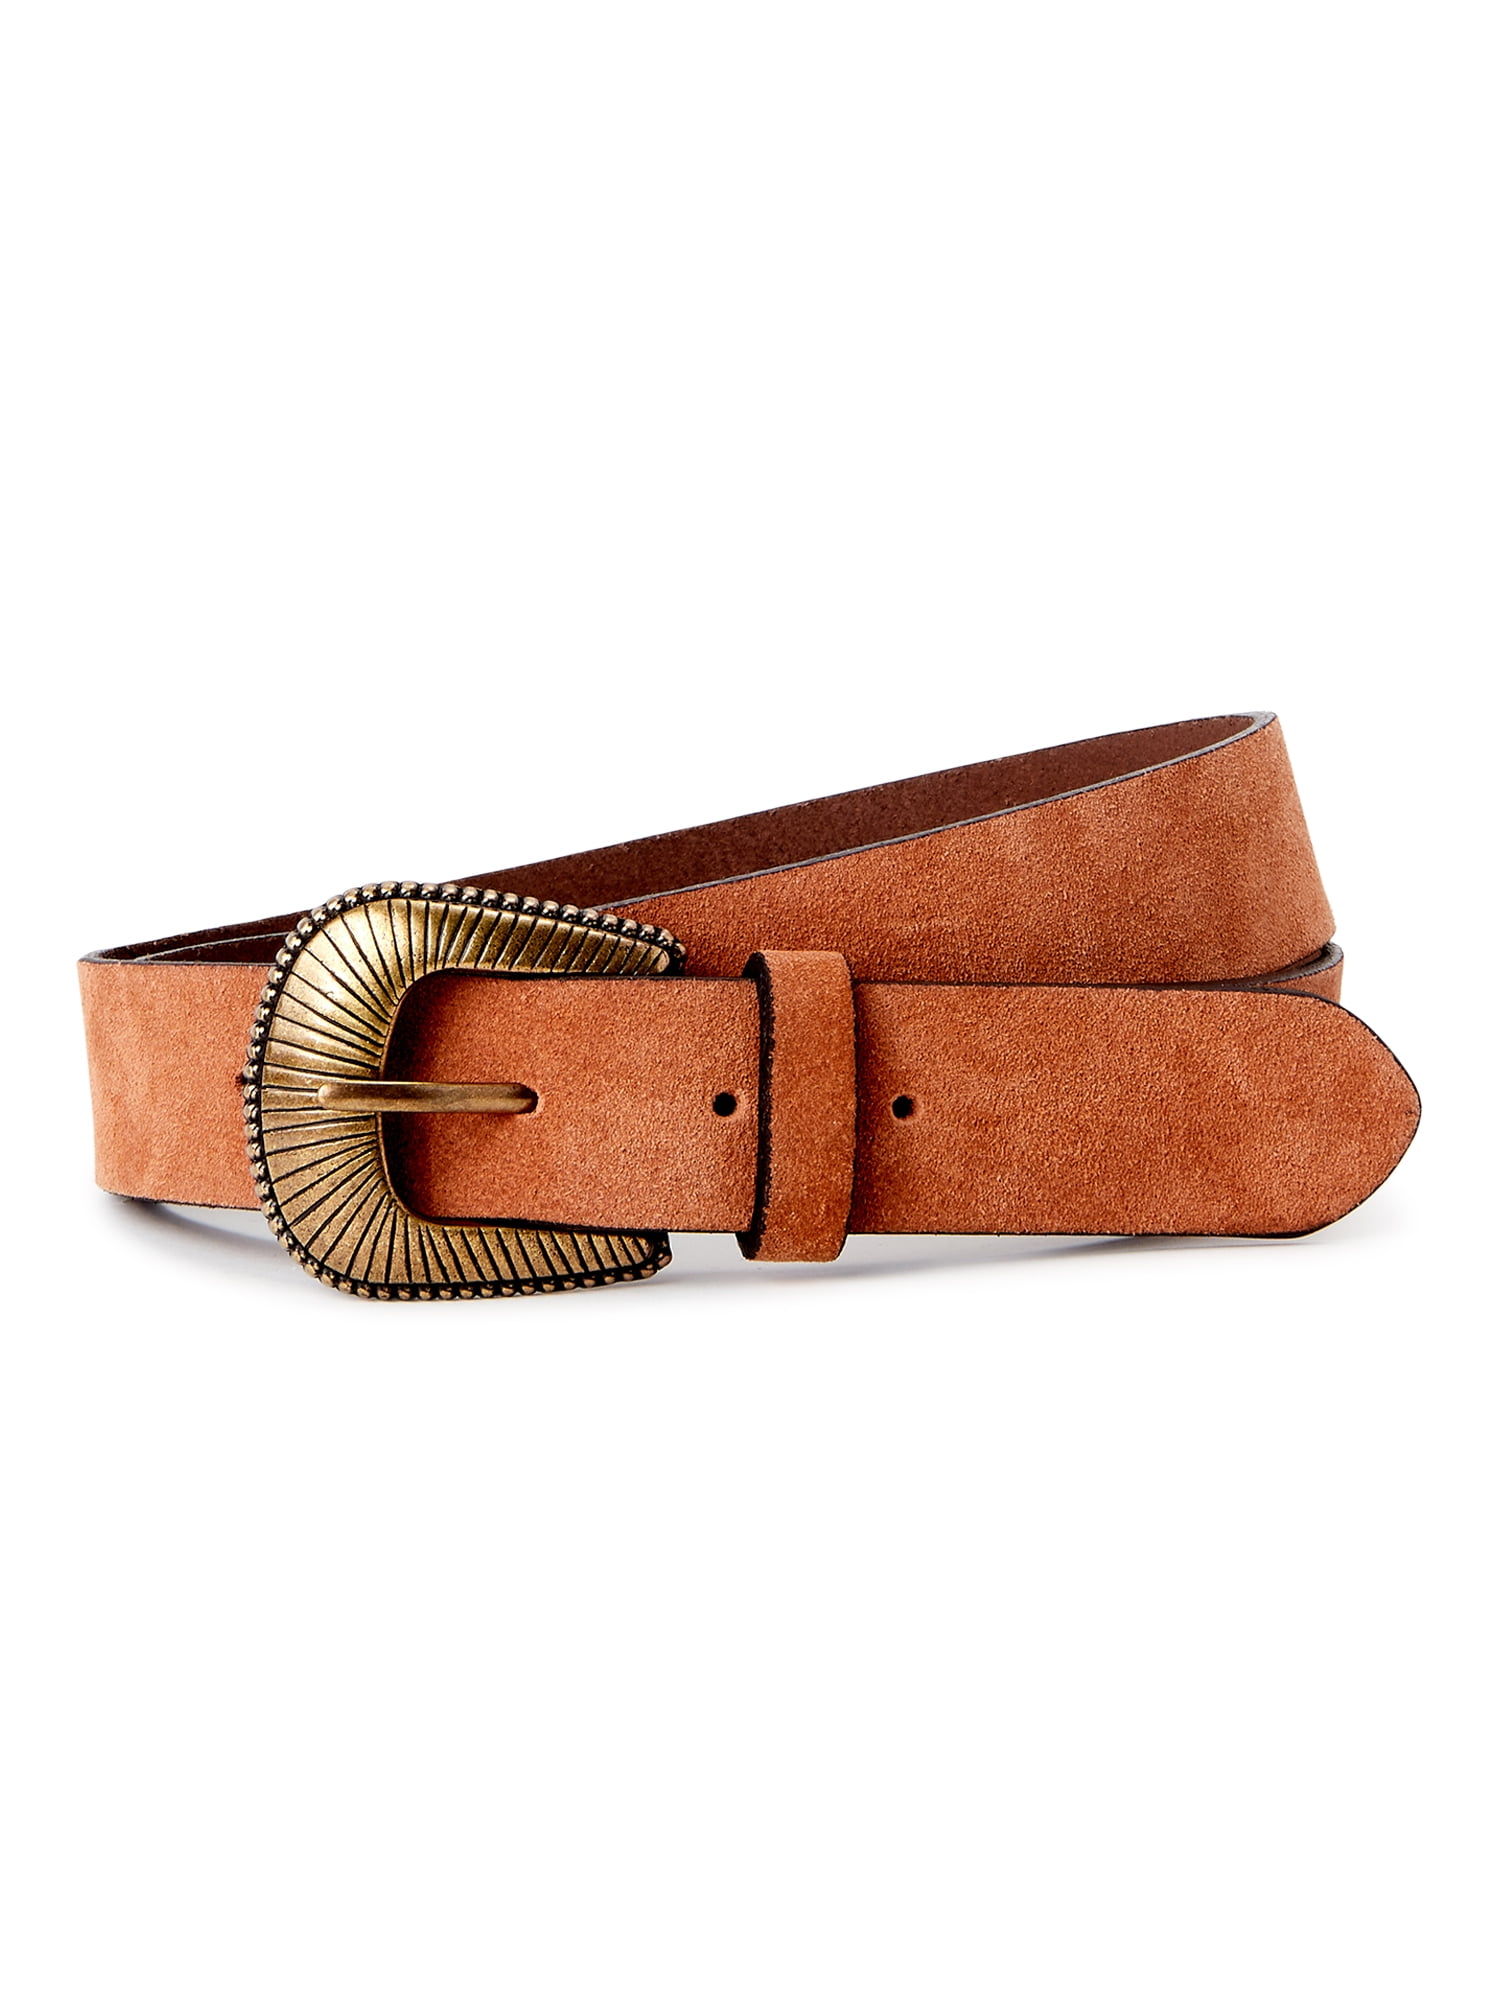 Time and Tru Women's Leather Belt, Cognac